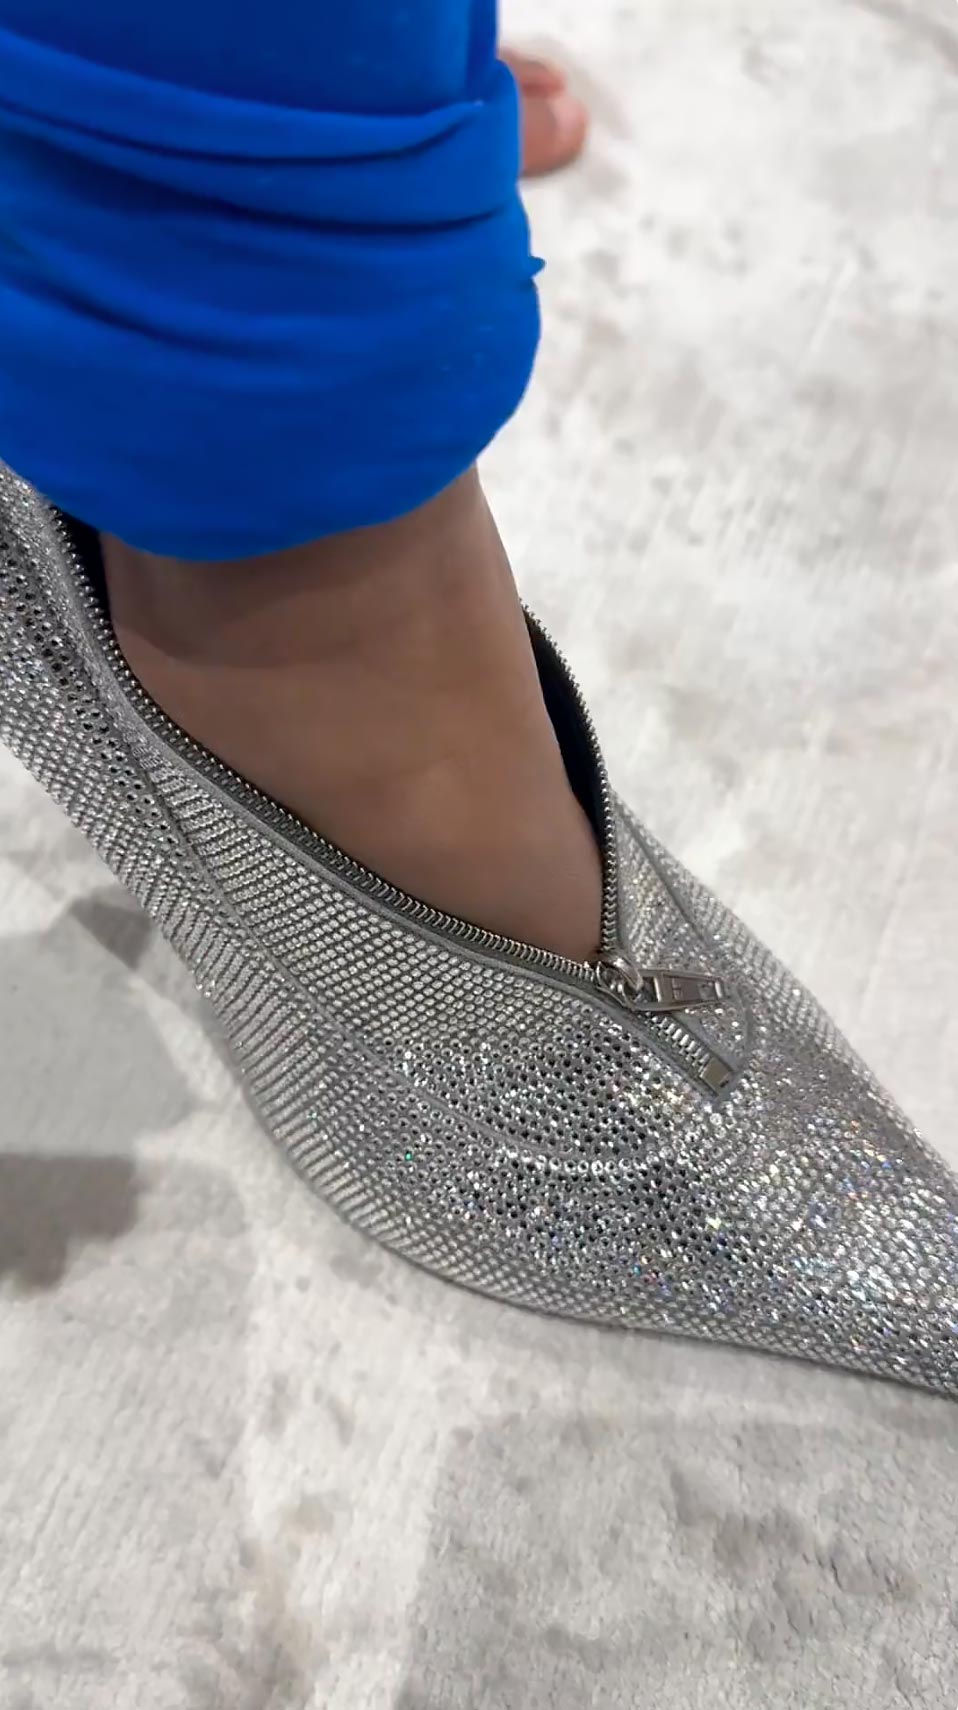 Chicago West tries wearing Kim Kardashian's Balenciaga shoe handbag as a heel